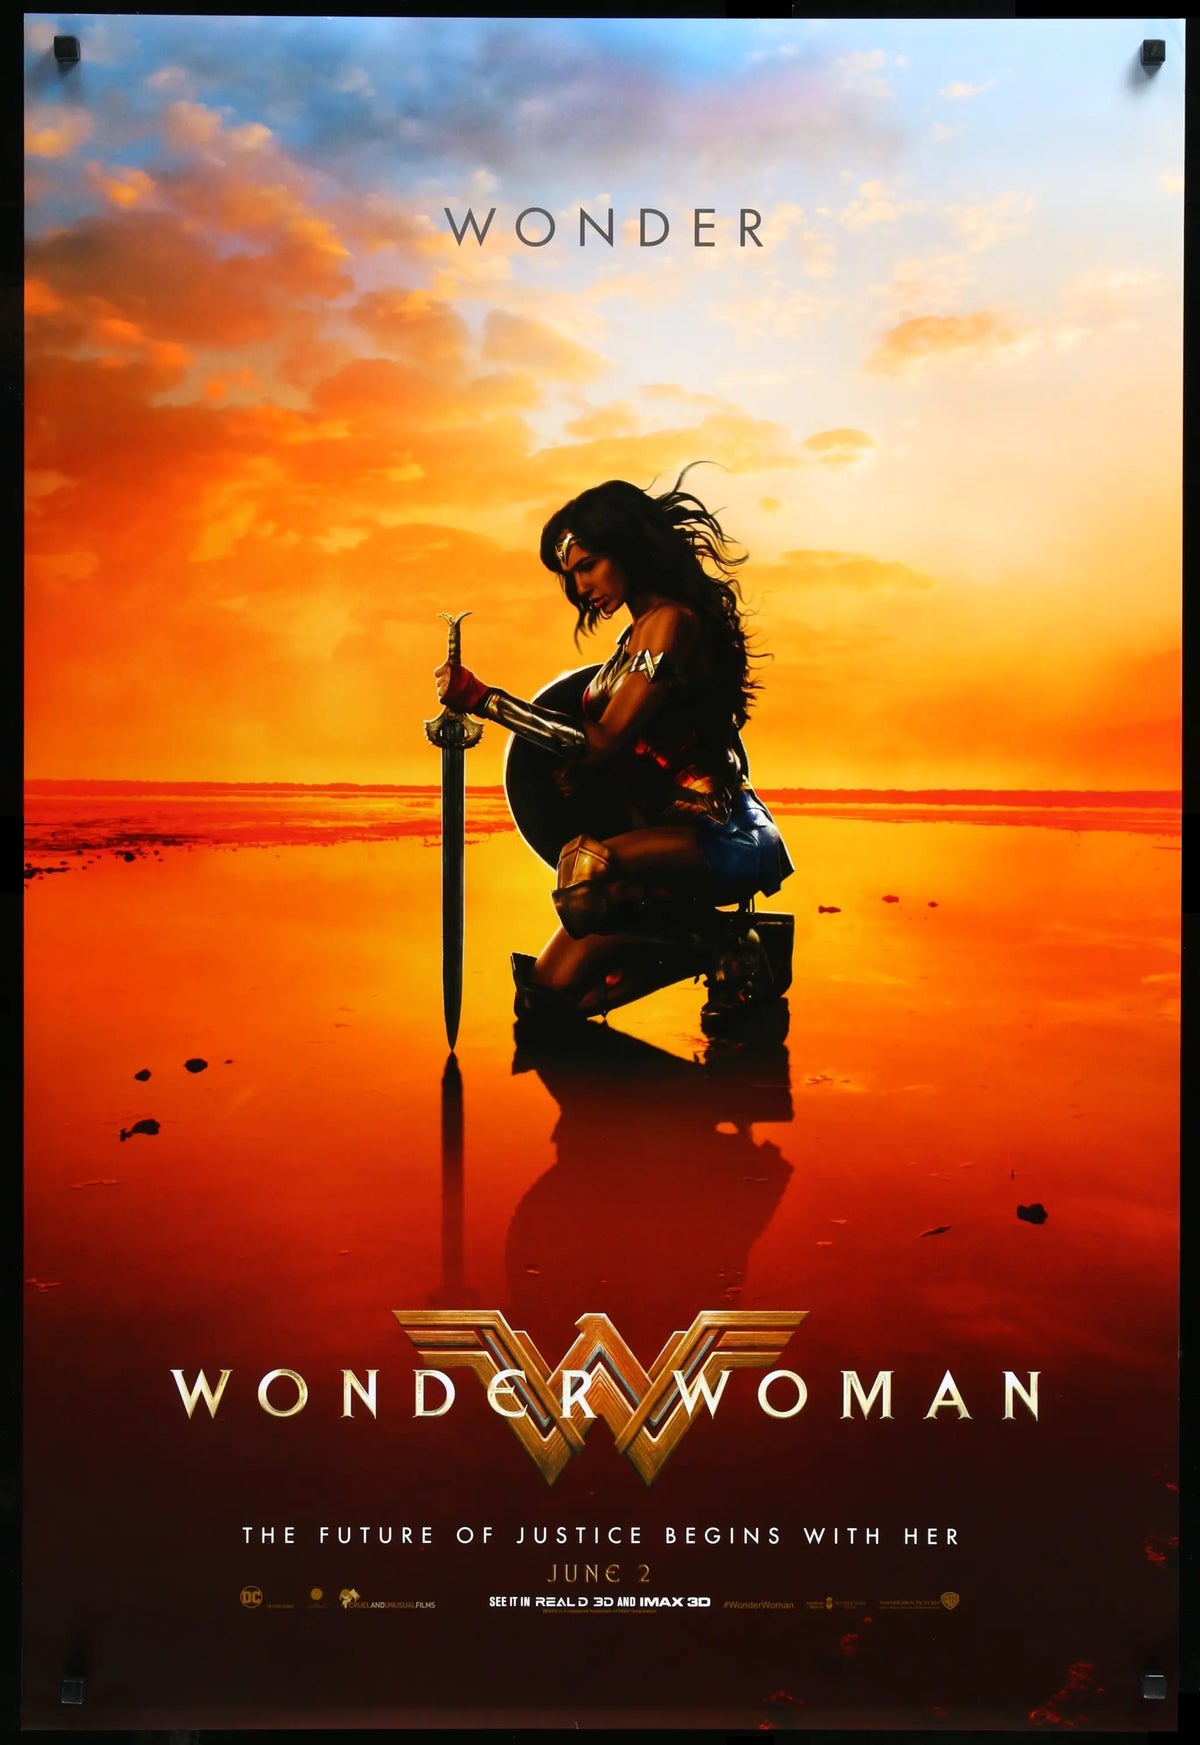 Wonder Woman (2017) original movie poster for sale at Original Film Art